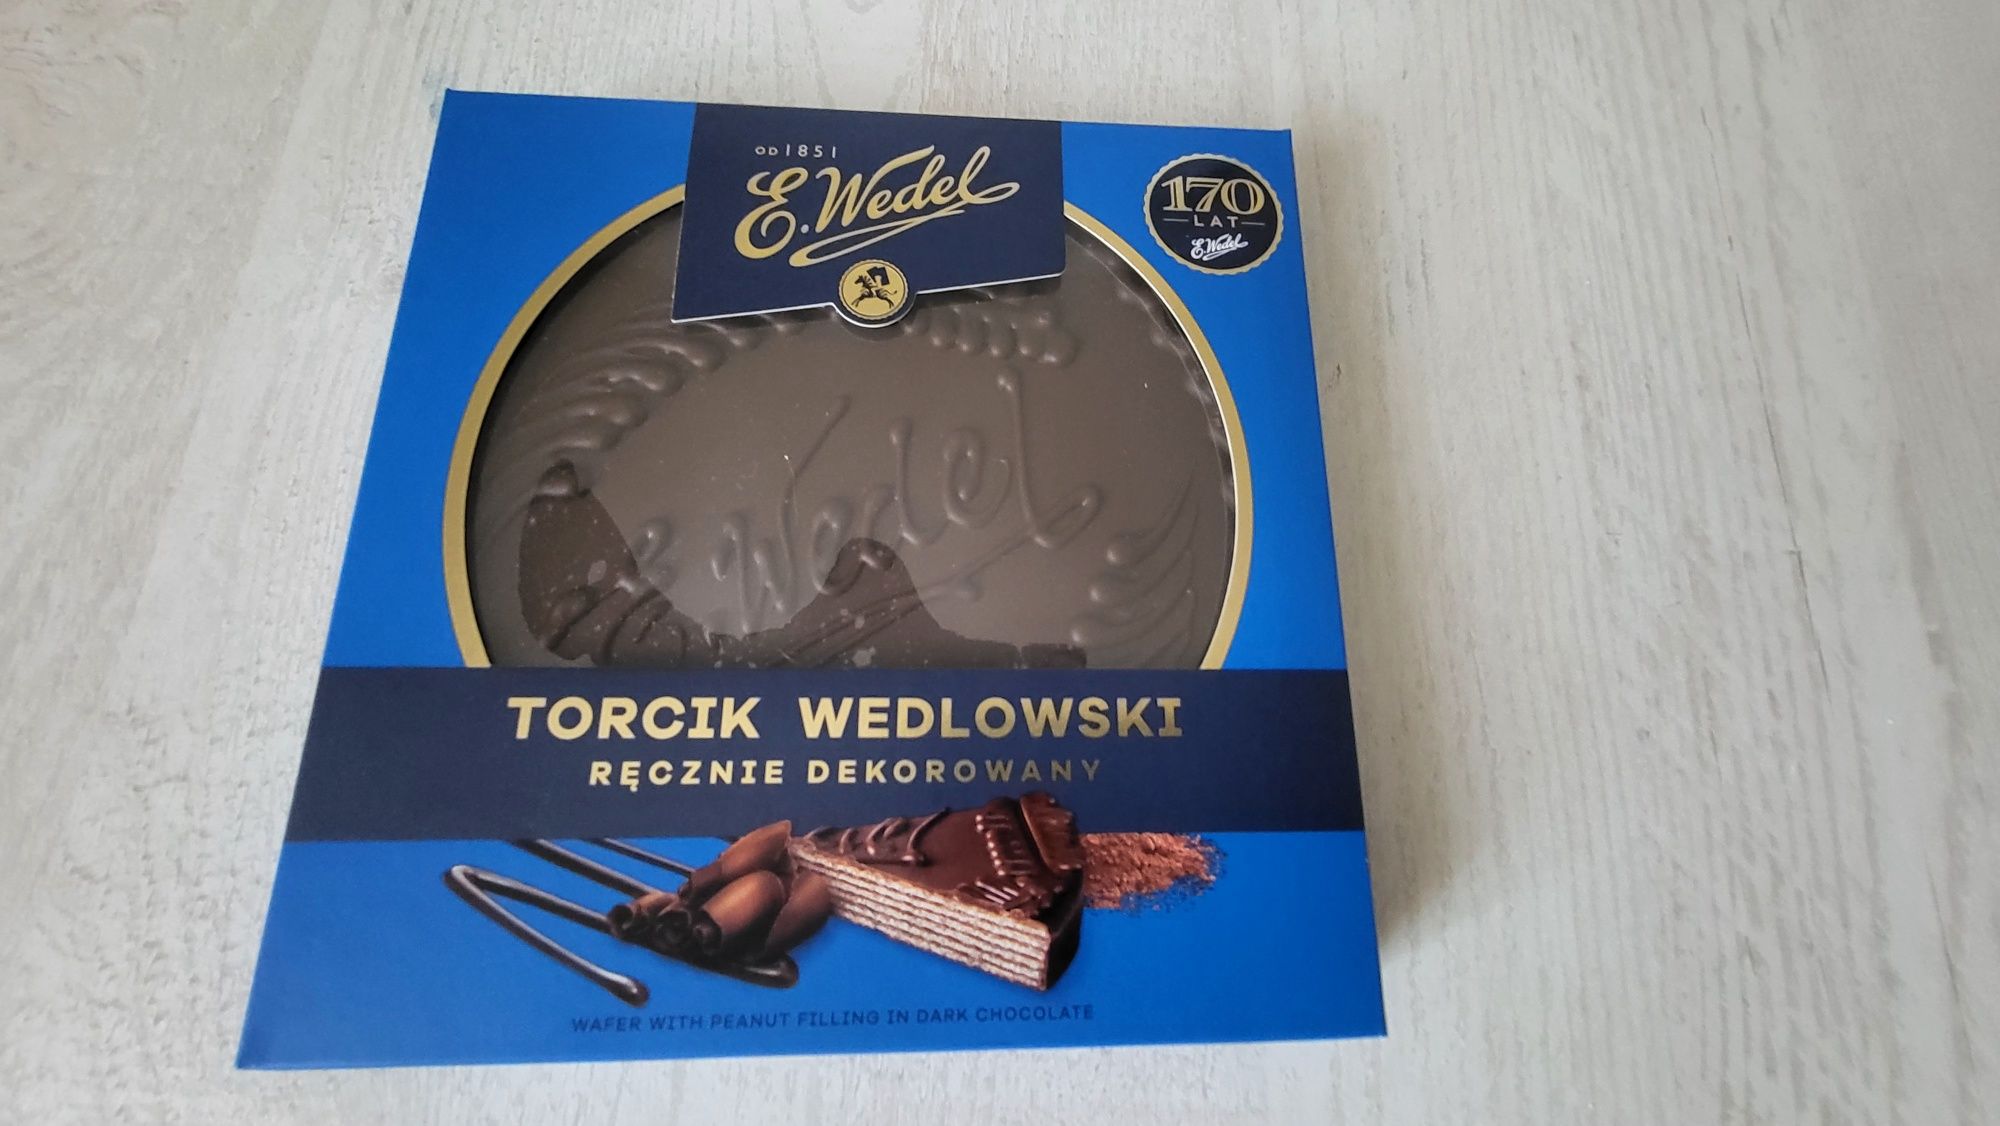 Wedel Torcik Wedlowski